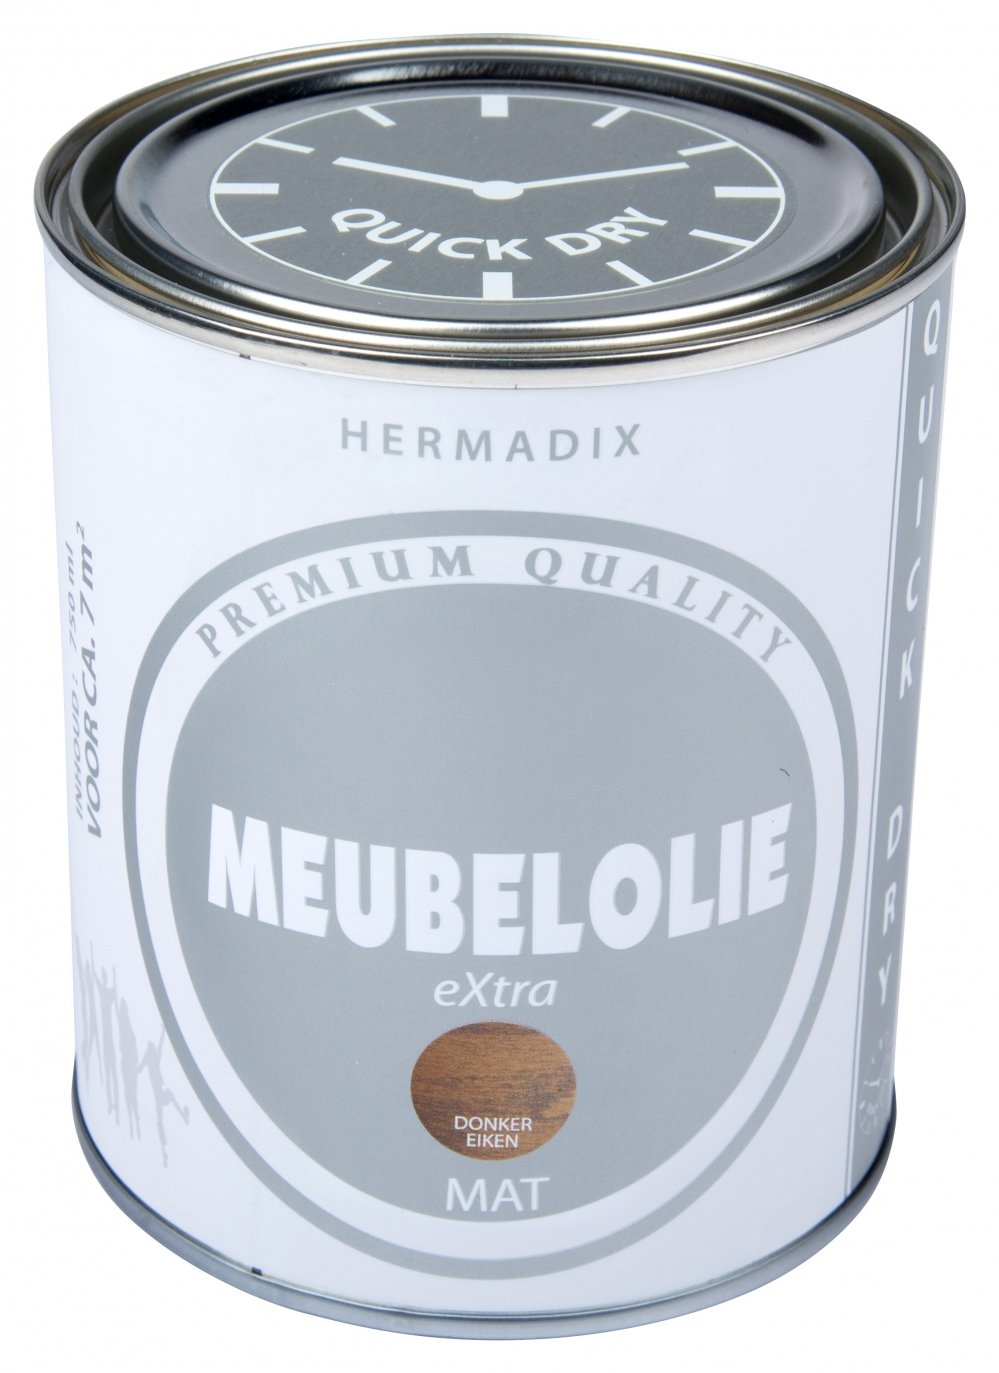 Hermadix - hermadix-meubellolie-extra-mat-donker-eiken1-verfcompleet.nl